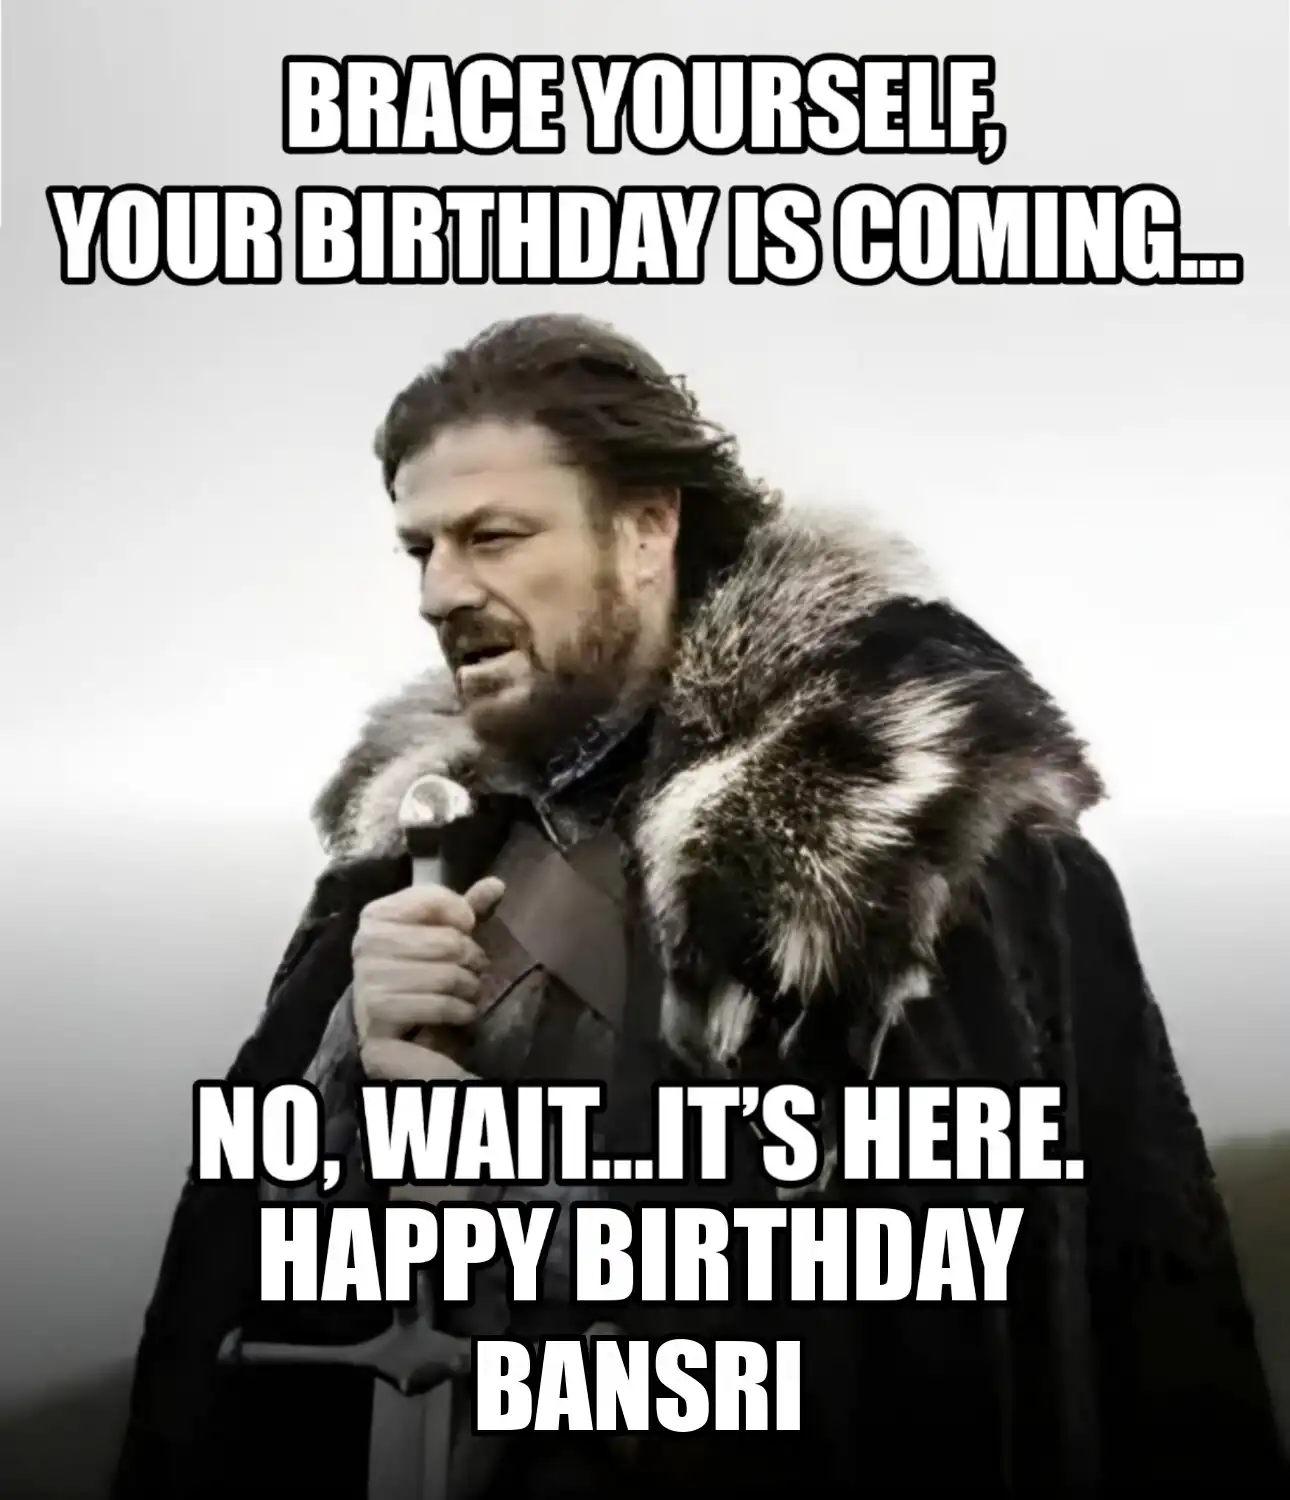 Happy Birthday Bansri Brace Yourself Your Birthday Is Coming Meme